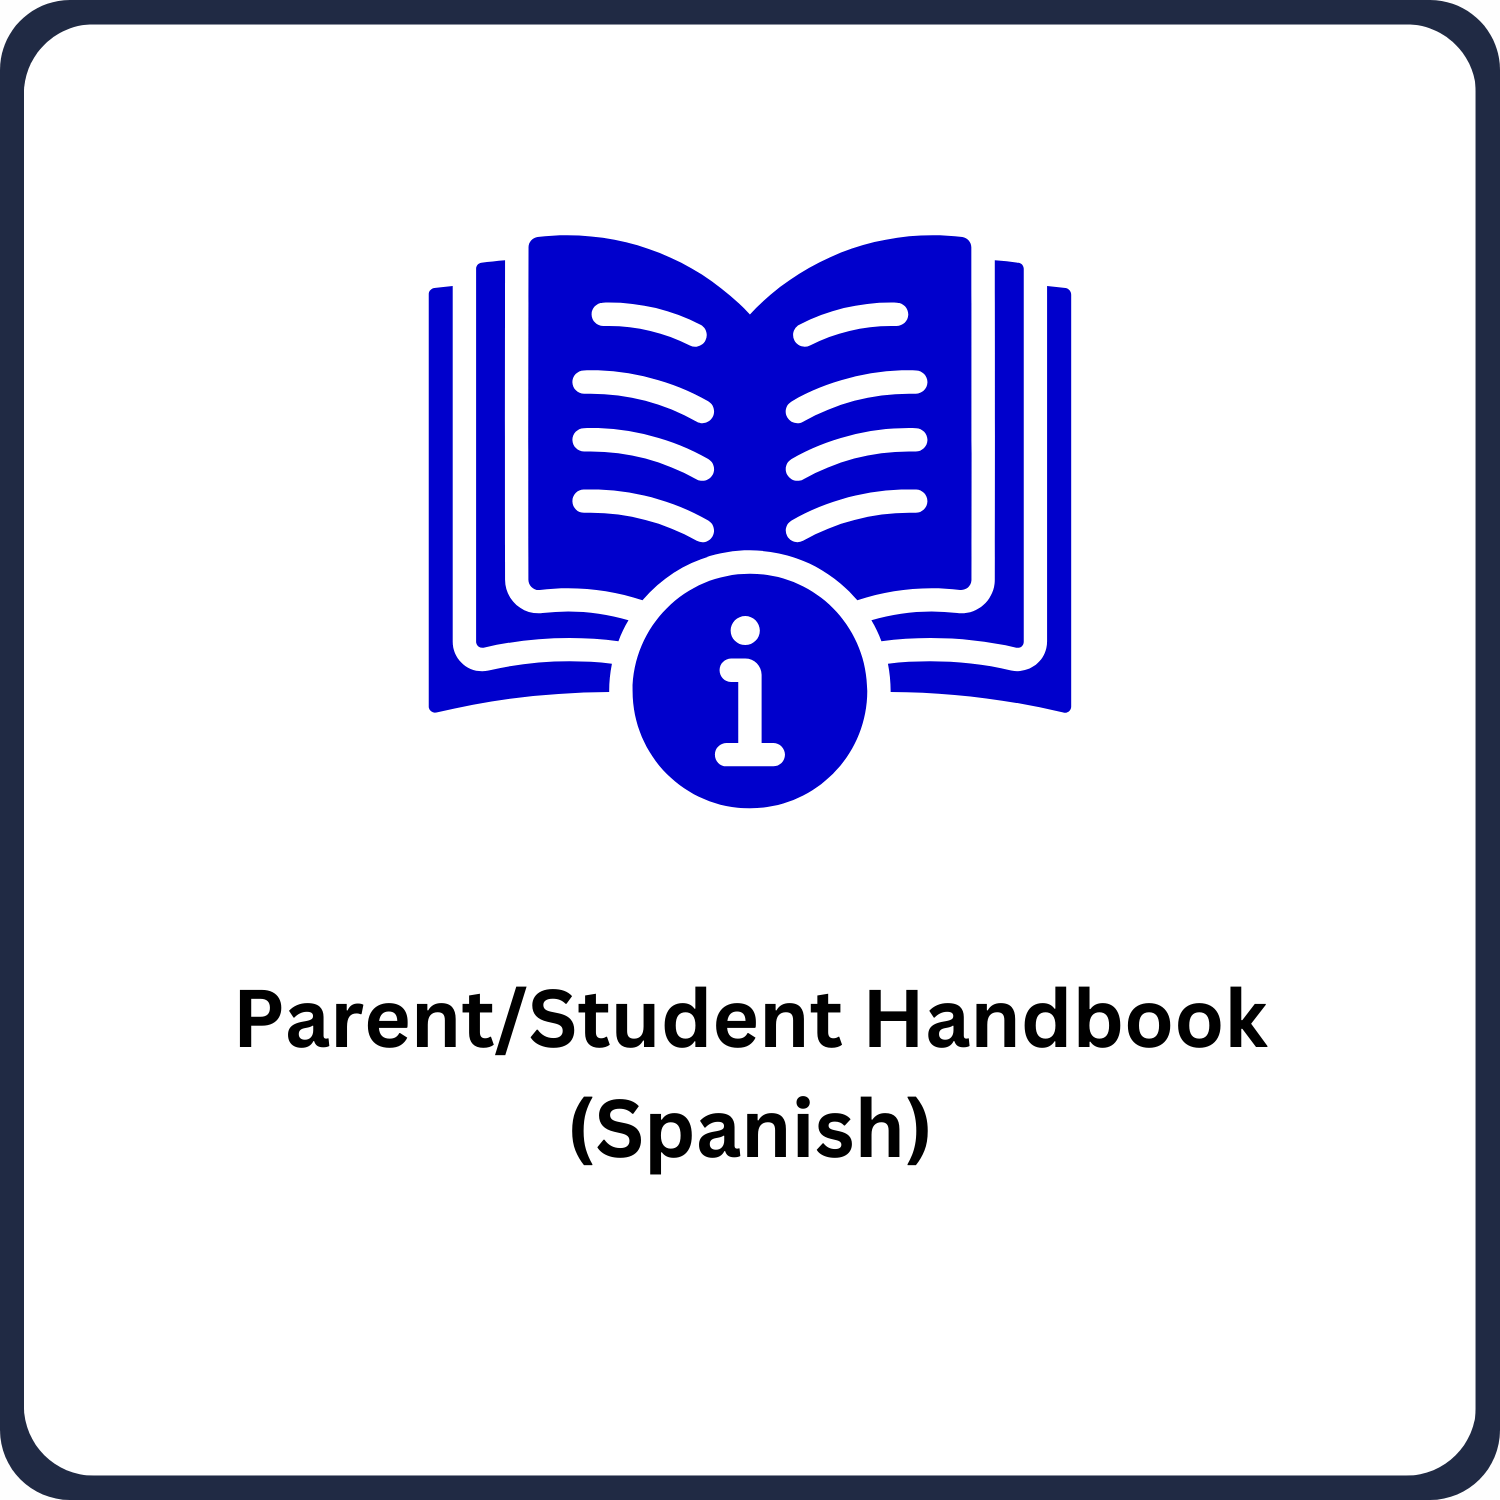 Parent/Student Handbook (Spanish)